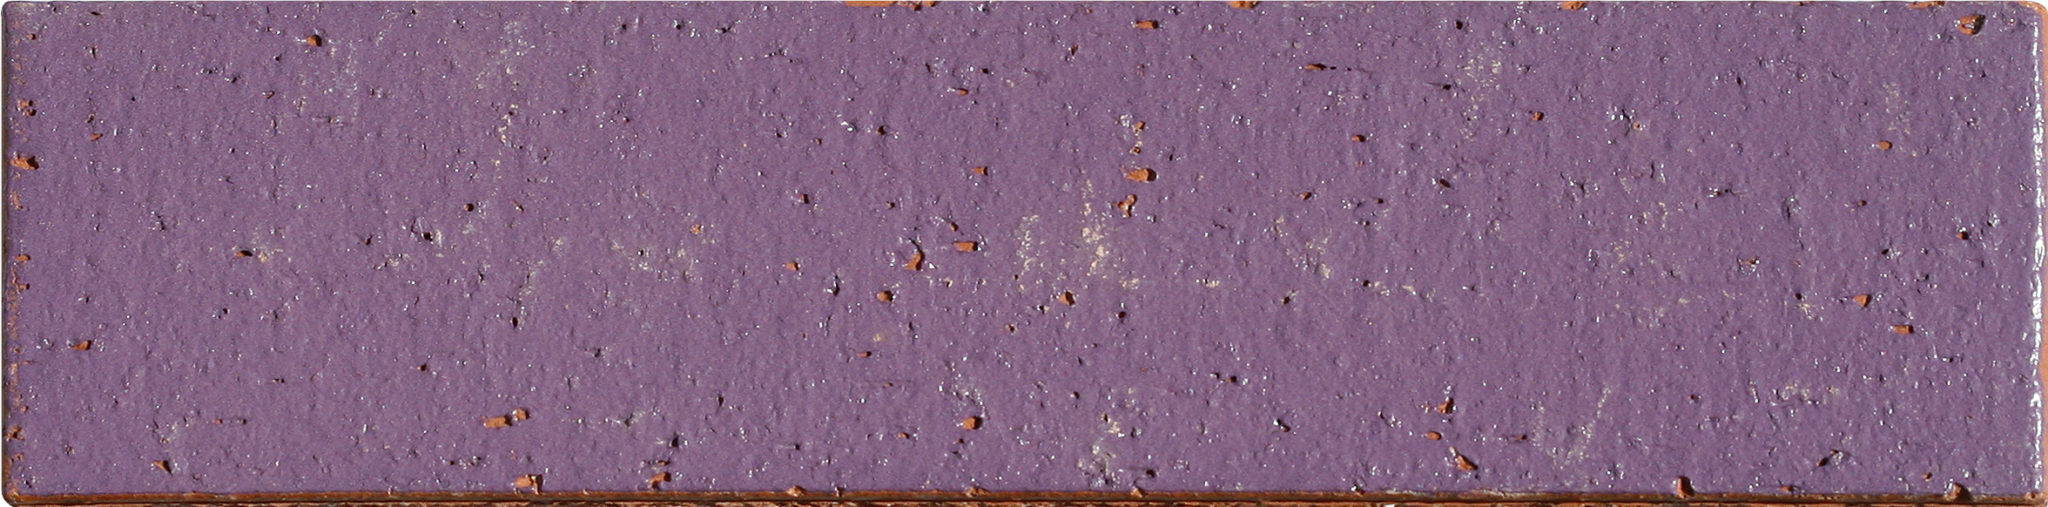 DJ - Morrocotto Violet Subway Tile